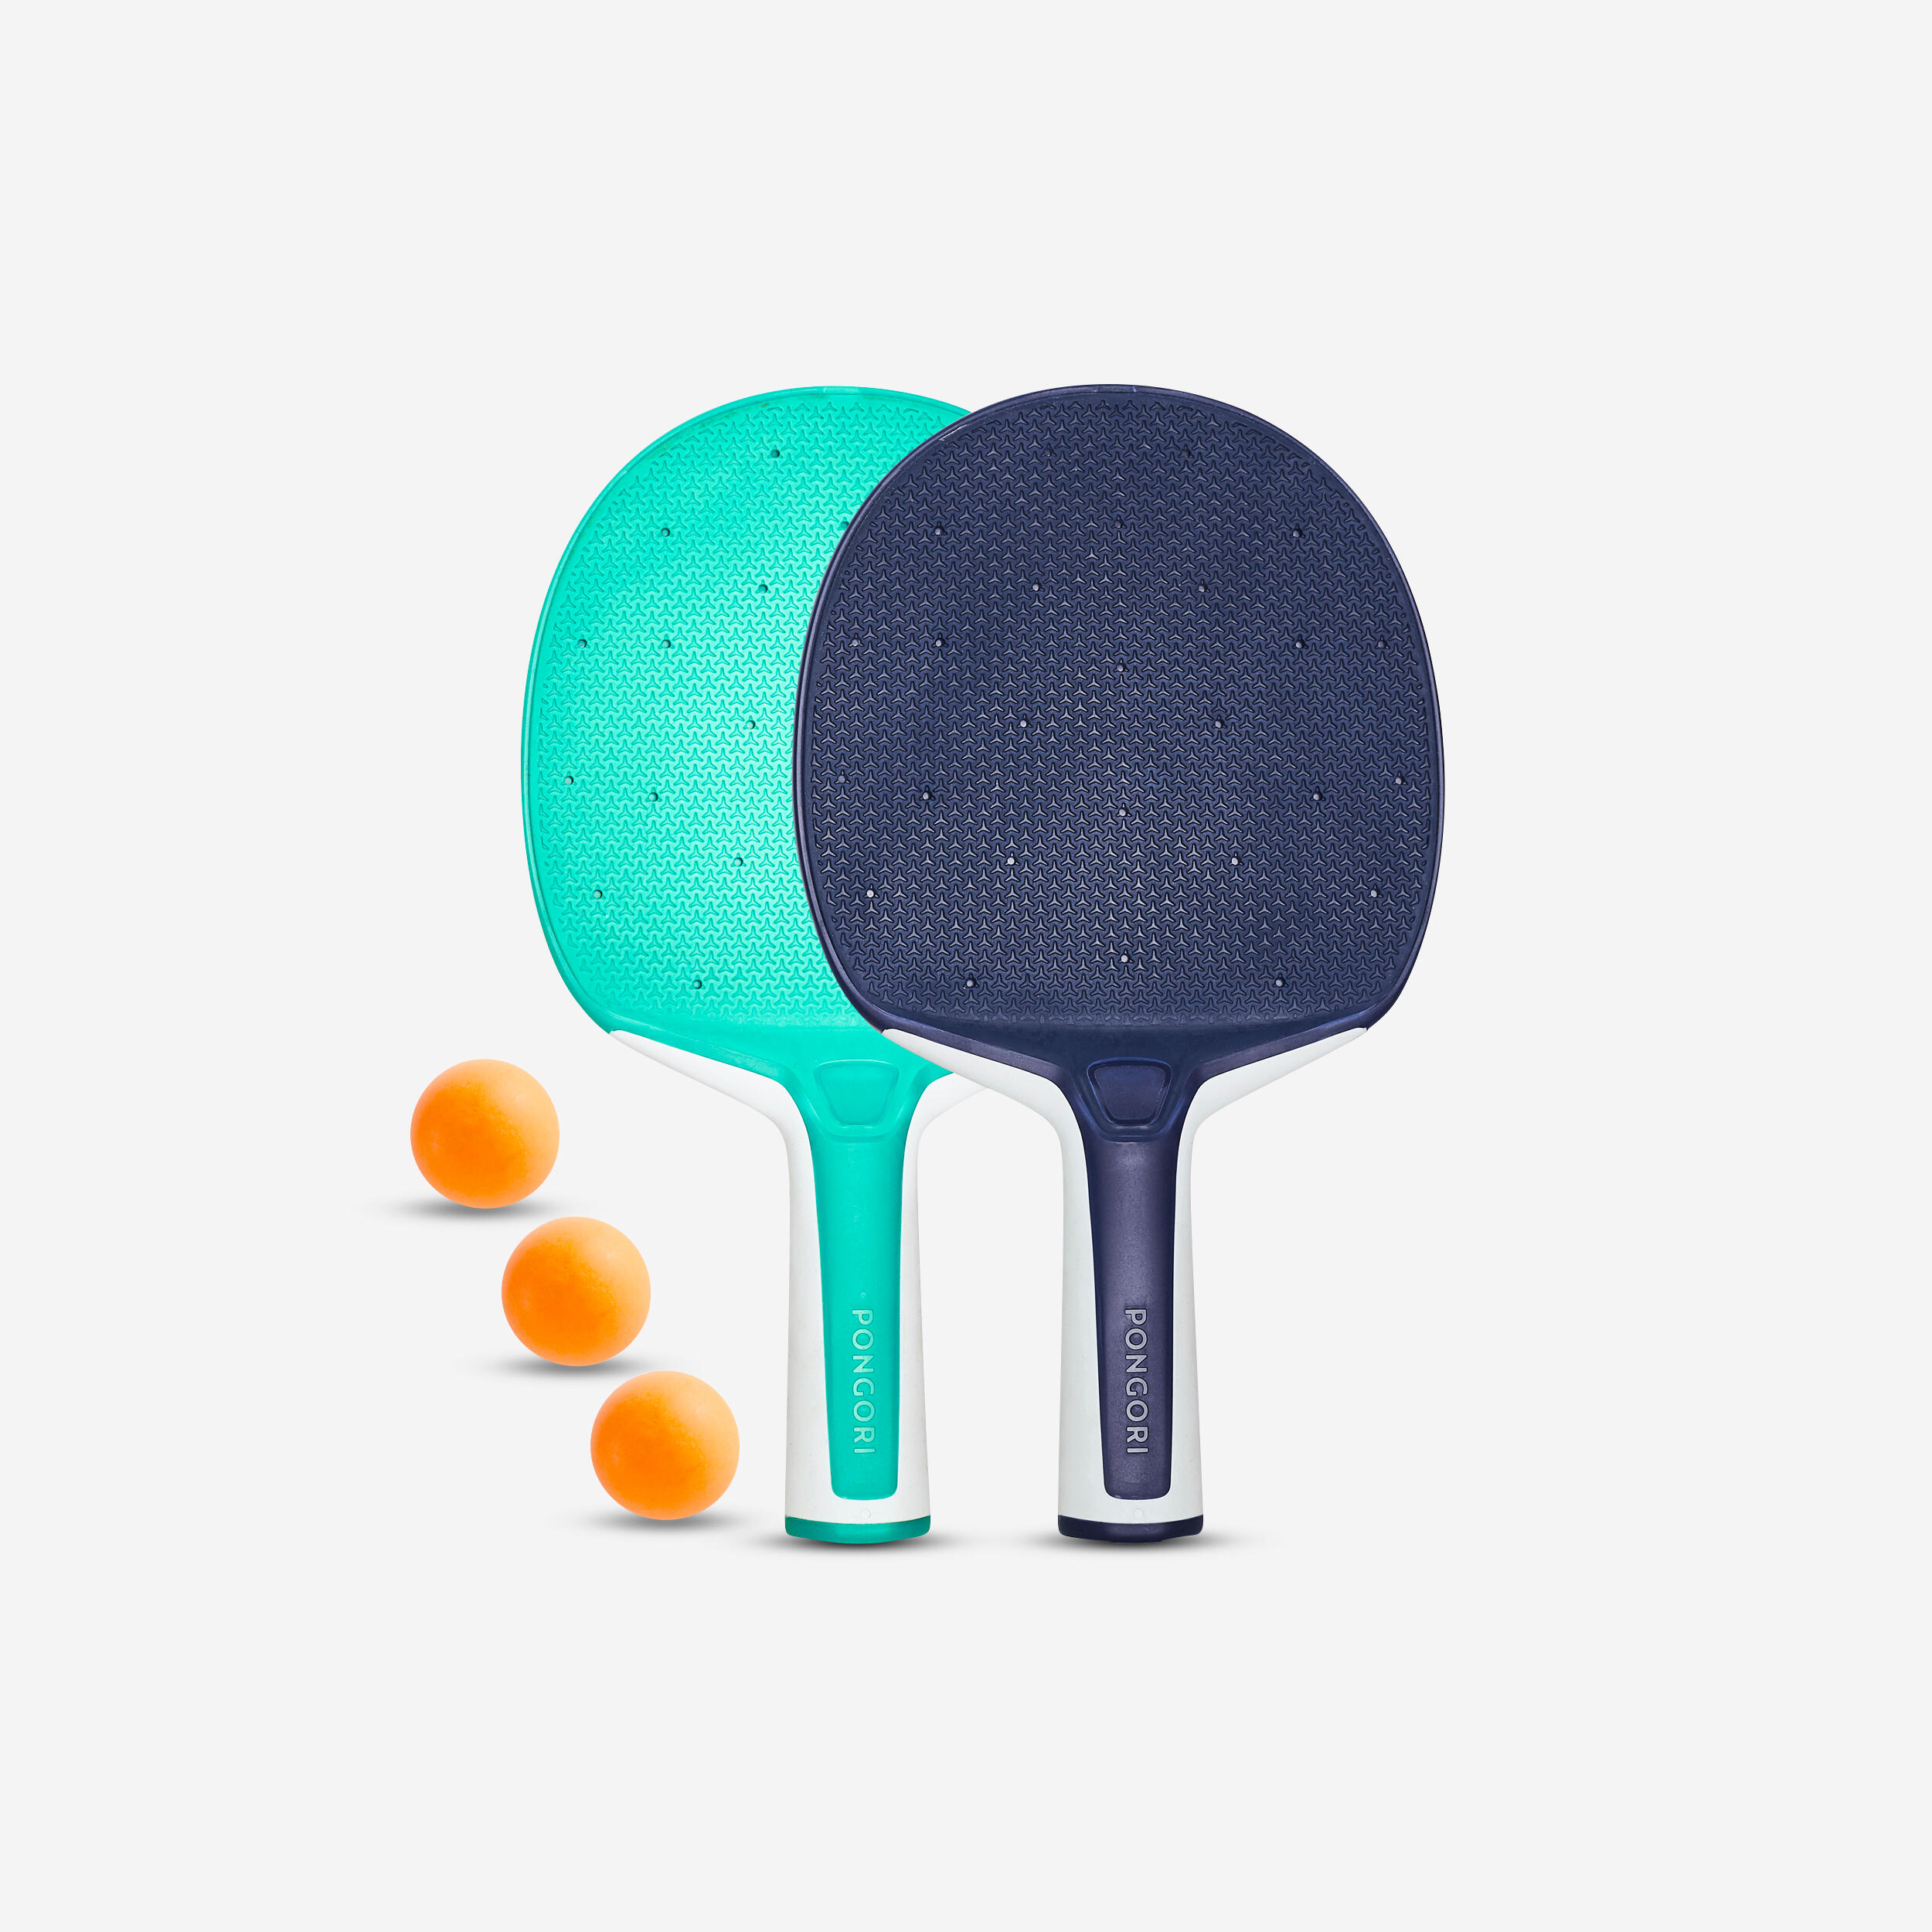 decathlon set ping pong